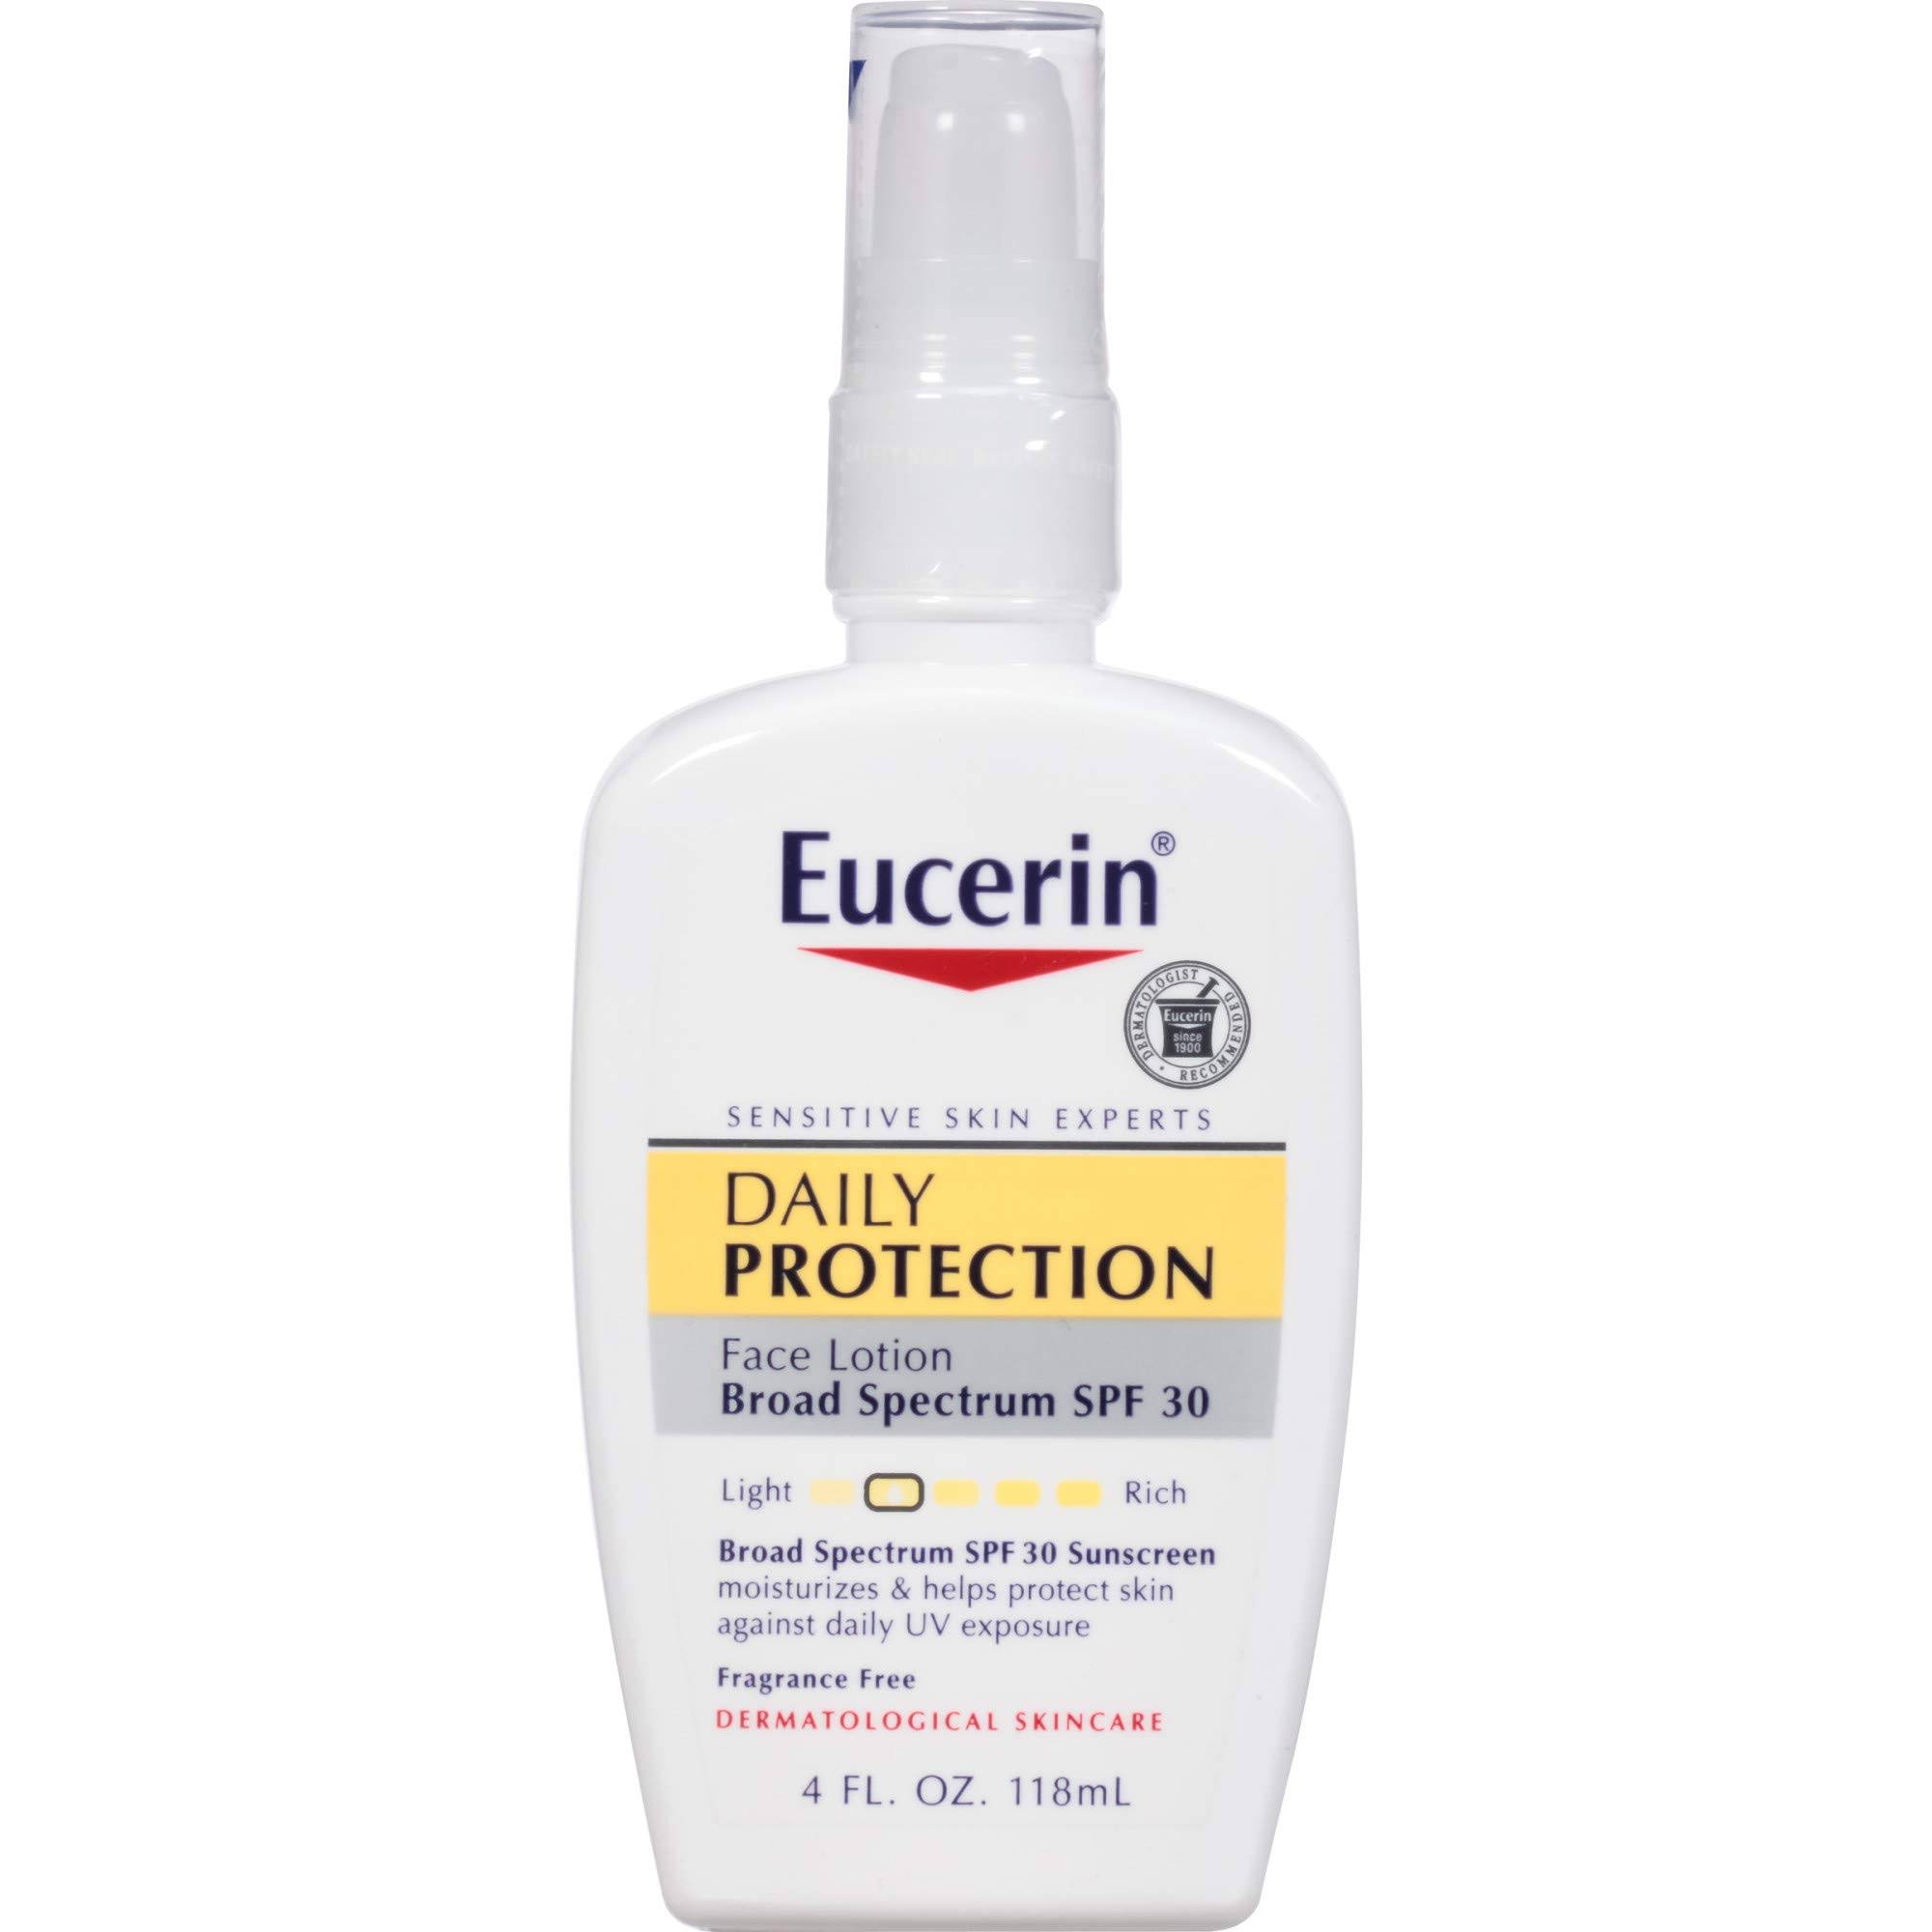 Eucerin Daily Protection Light Broad Spectrum Sunscreen Moisturizing Face Lotion - SPF 30, 4 fl oz